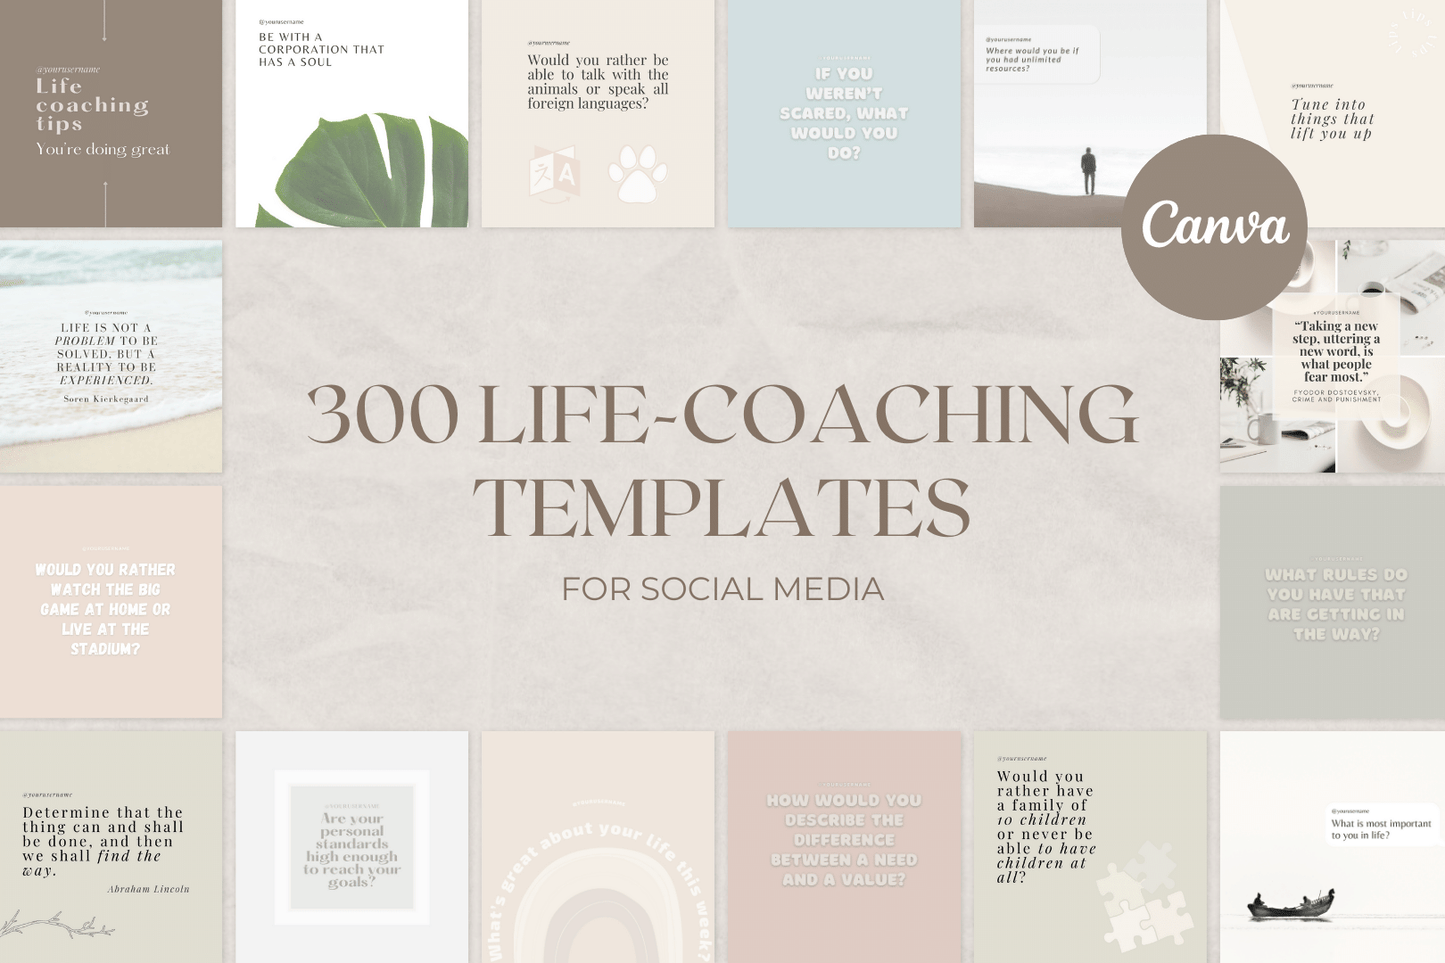 300 Life-coaching Templates for Social Media